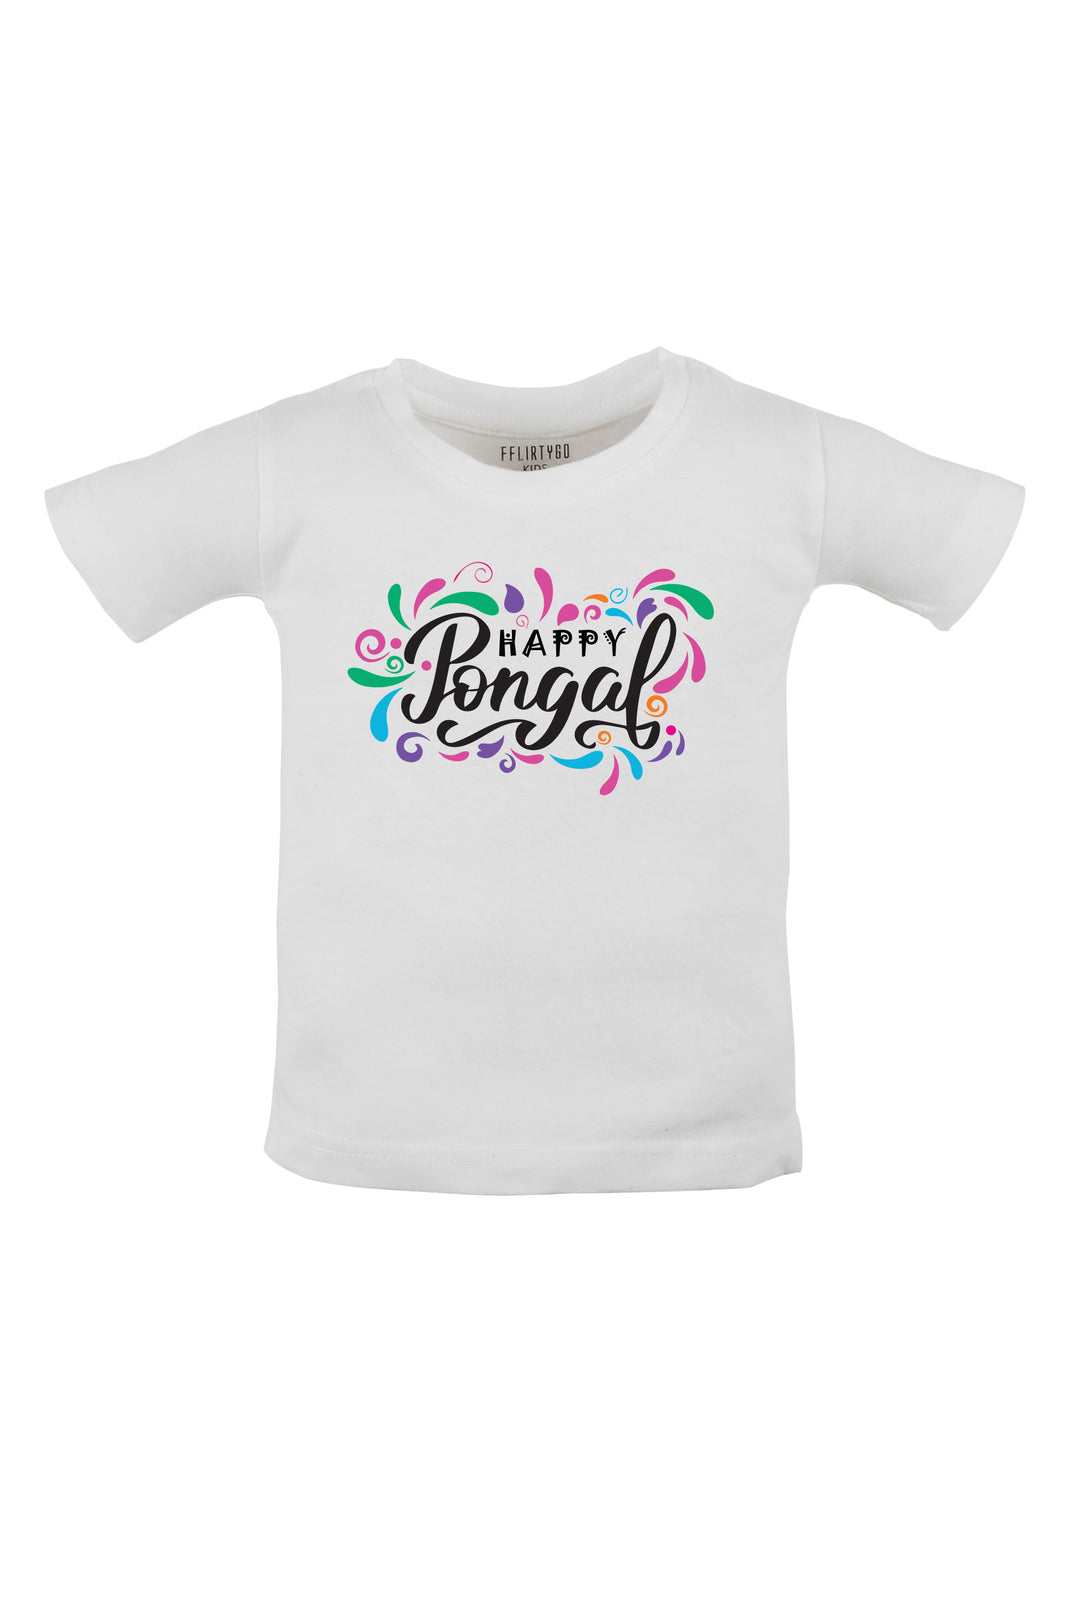 Happy Pongal Splash Kids T Shirt